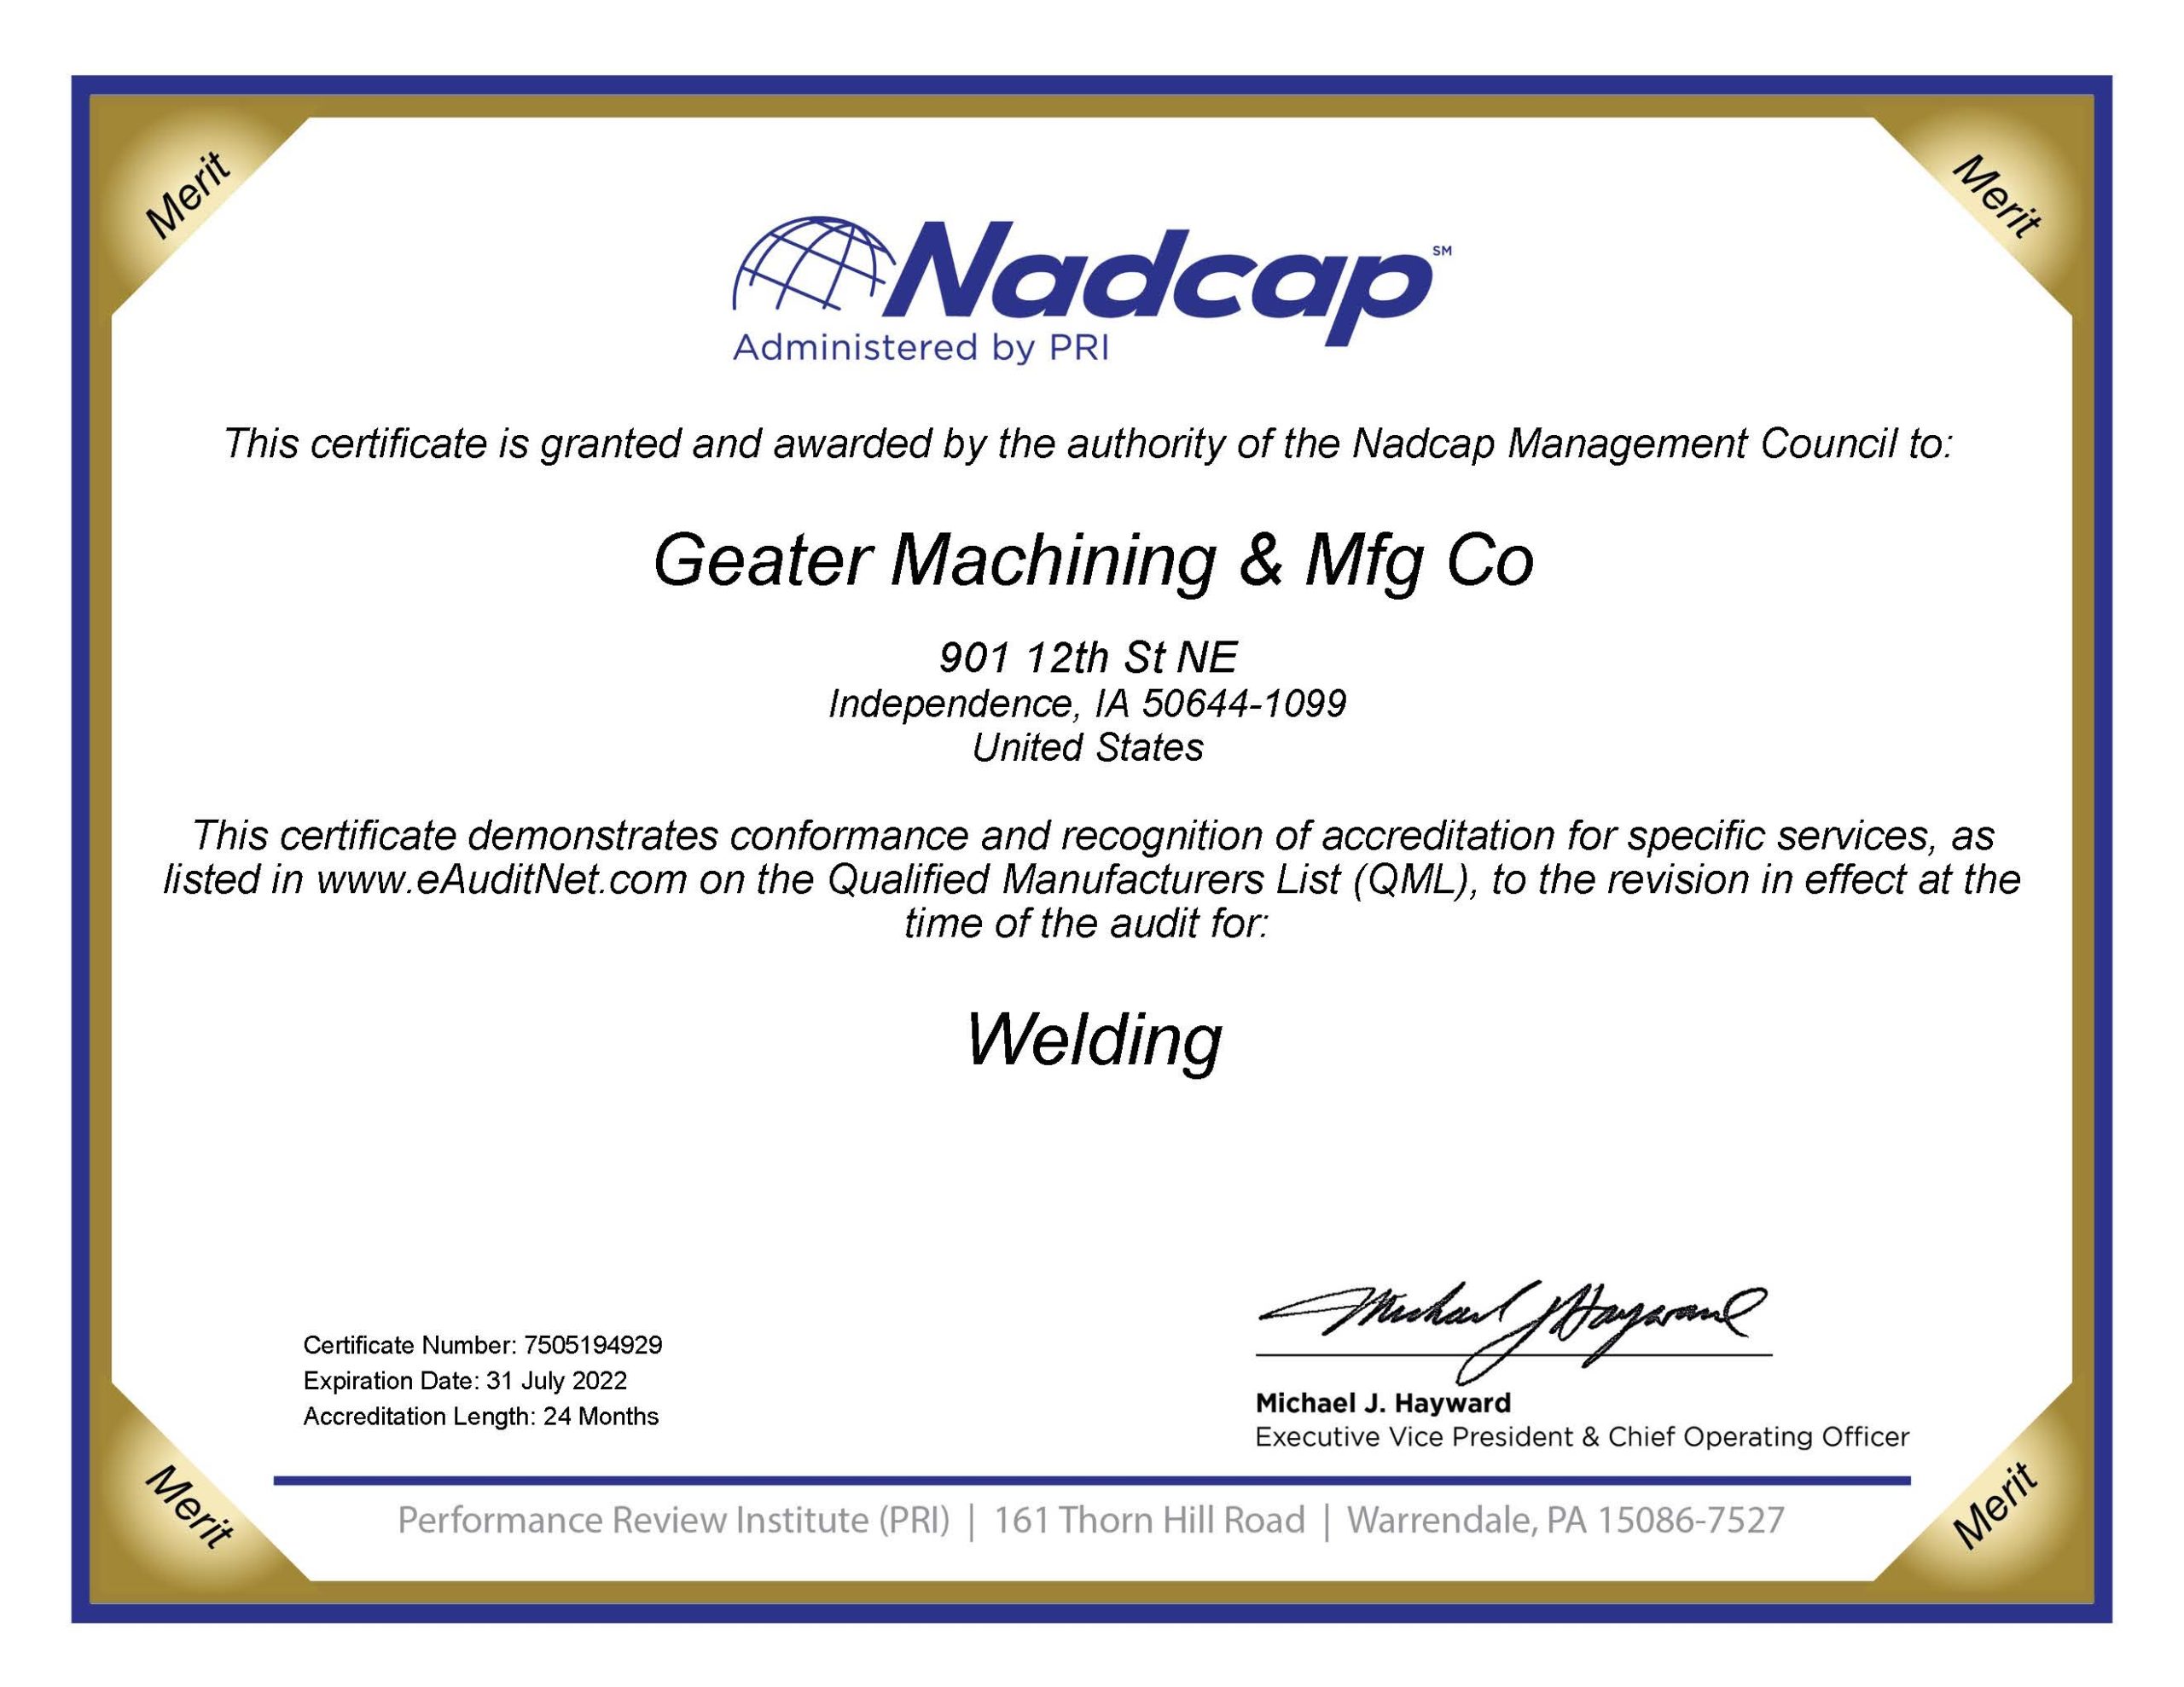 Nadcap Welding certification